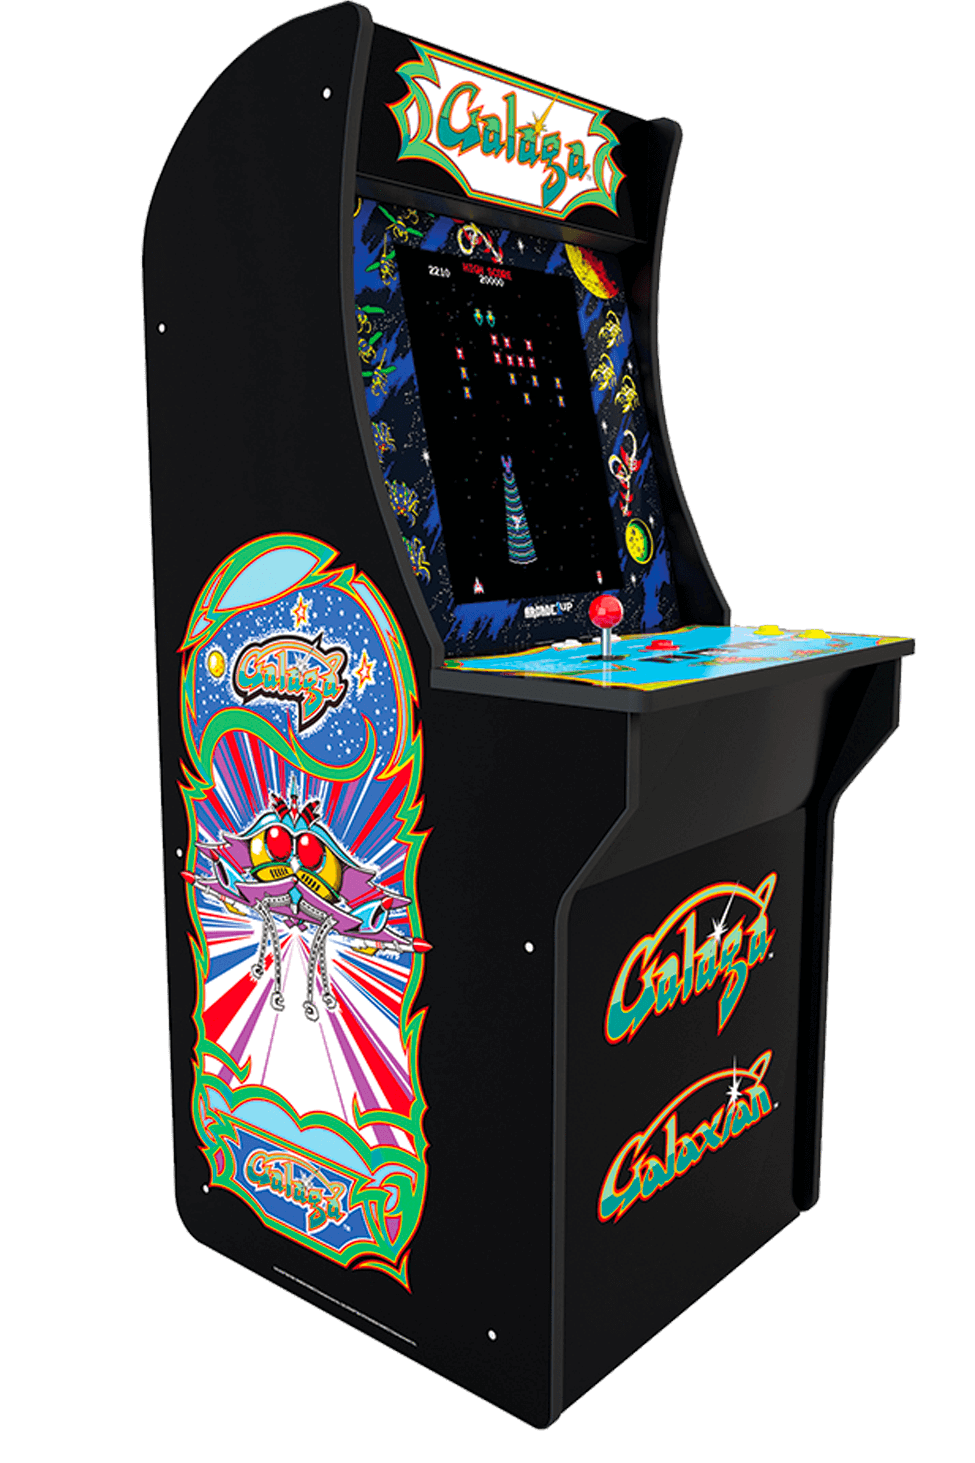 Multi Game Galaga Mame Arcade Machine Wholesale Arcade Play Games Arcade -  China Wholesale Arcade Games and Galaga Arcade Machine price